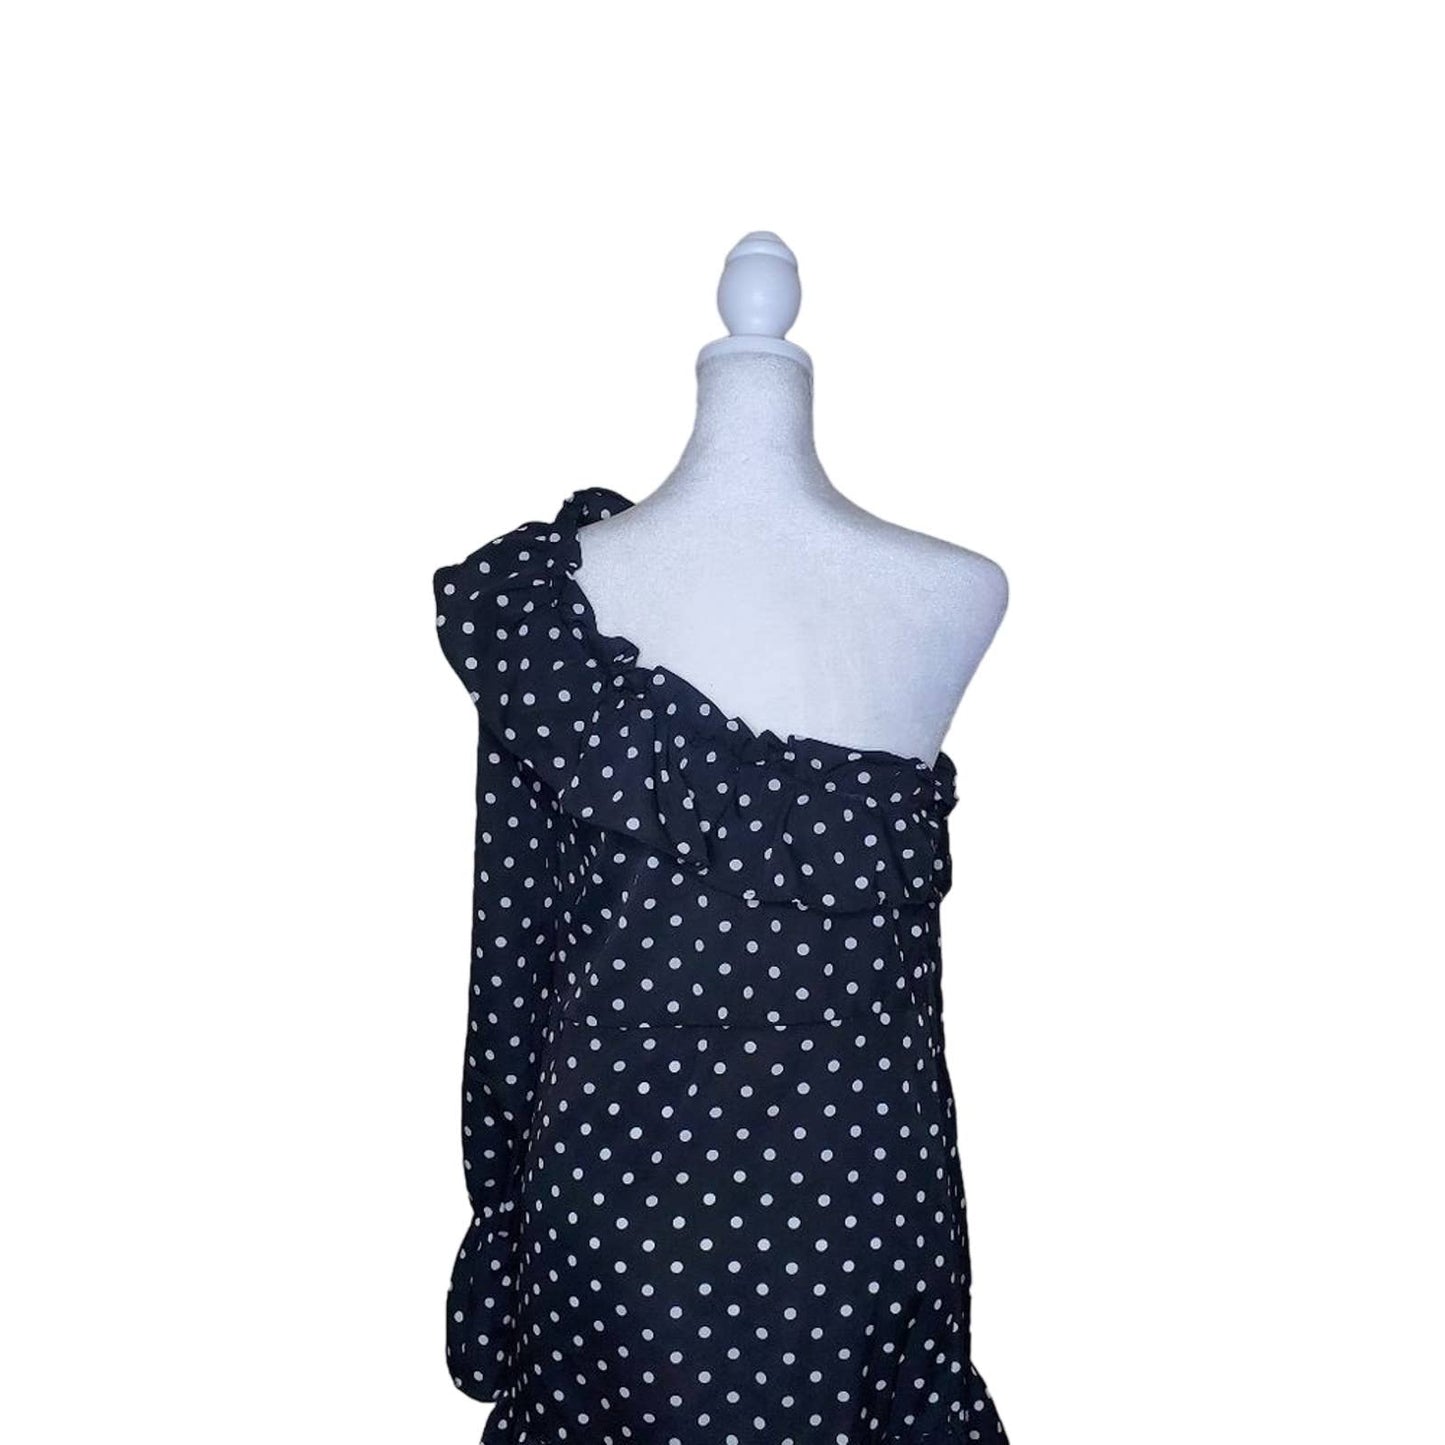 Femme Luxe Black & White Polka Dot One Shoulder Mini Dress, Size X-Small